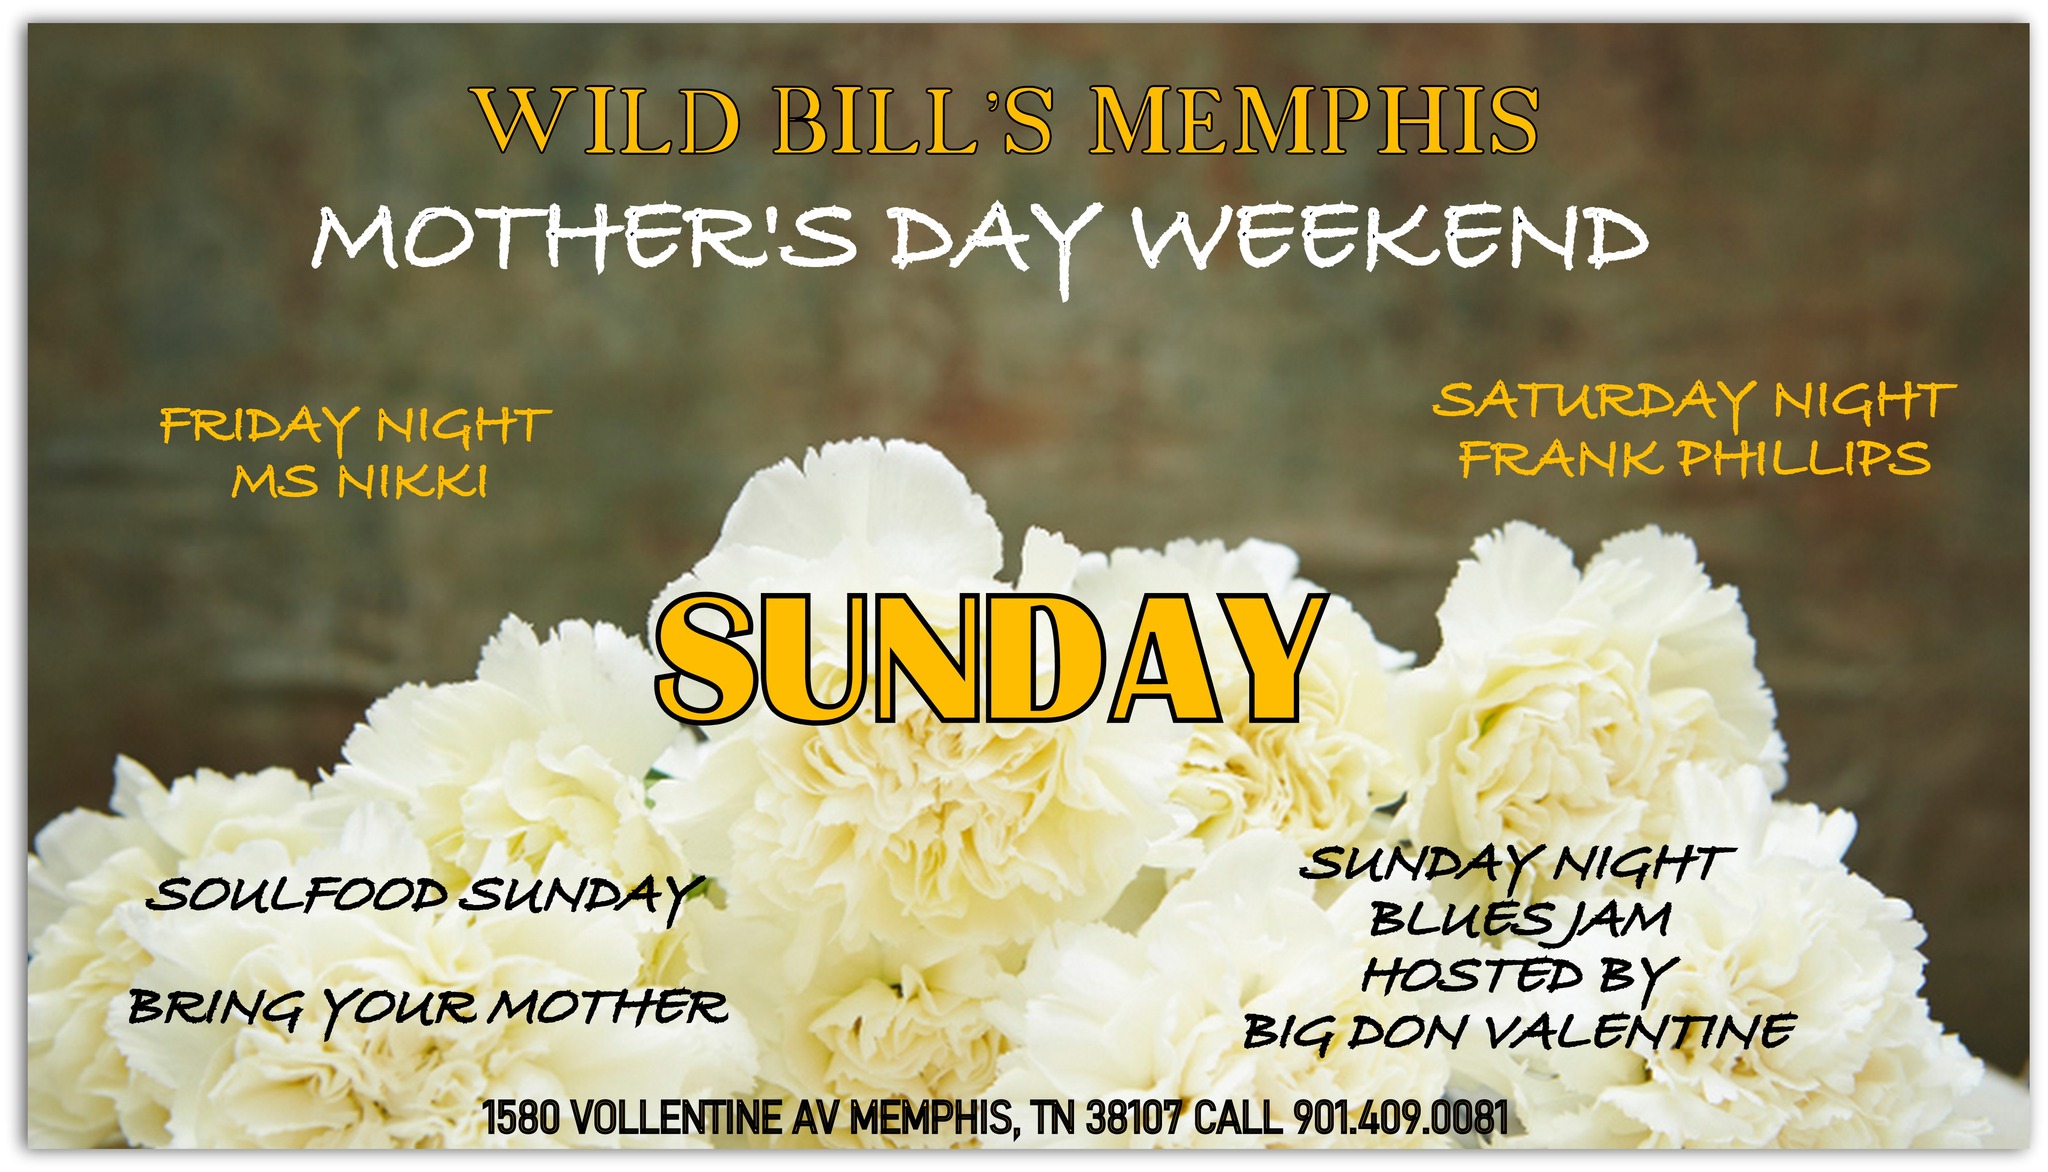 Mother’s Day Weekend @ Wild Bills